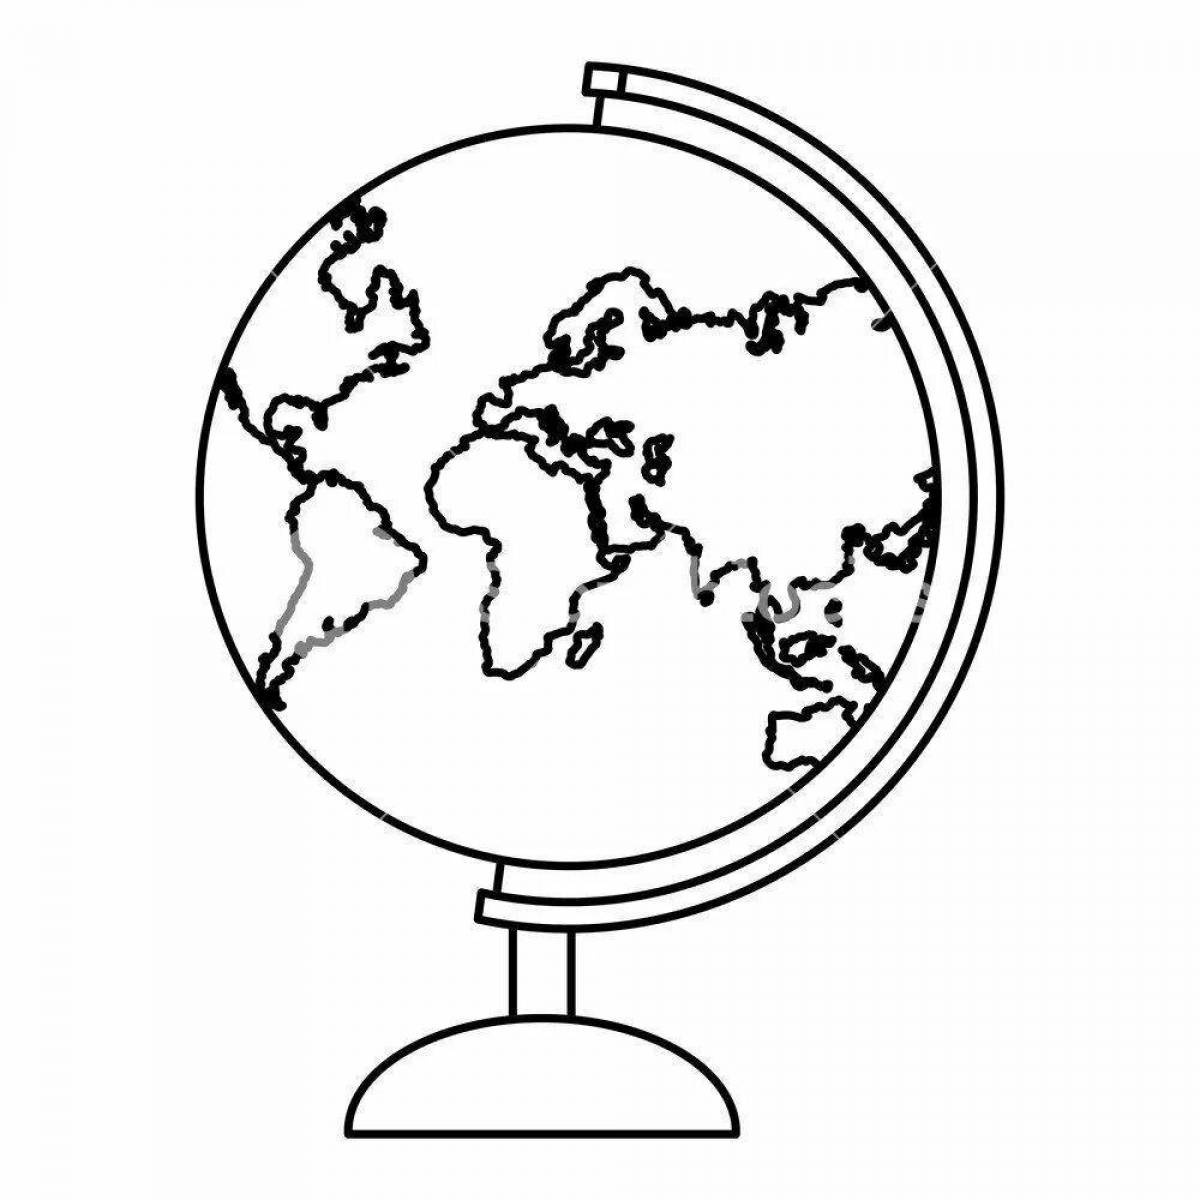 Joyful drawing of the globe for children